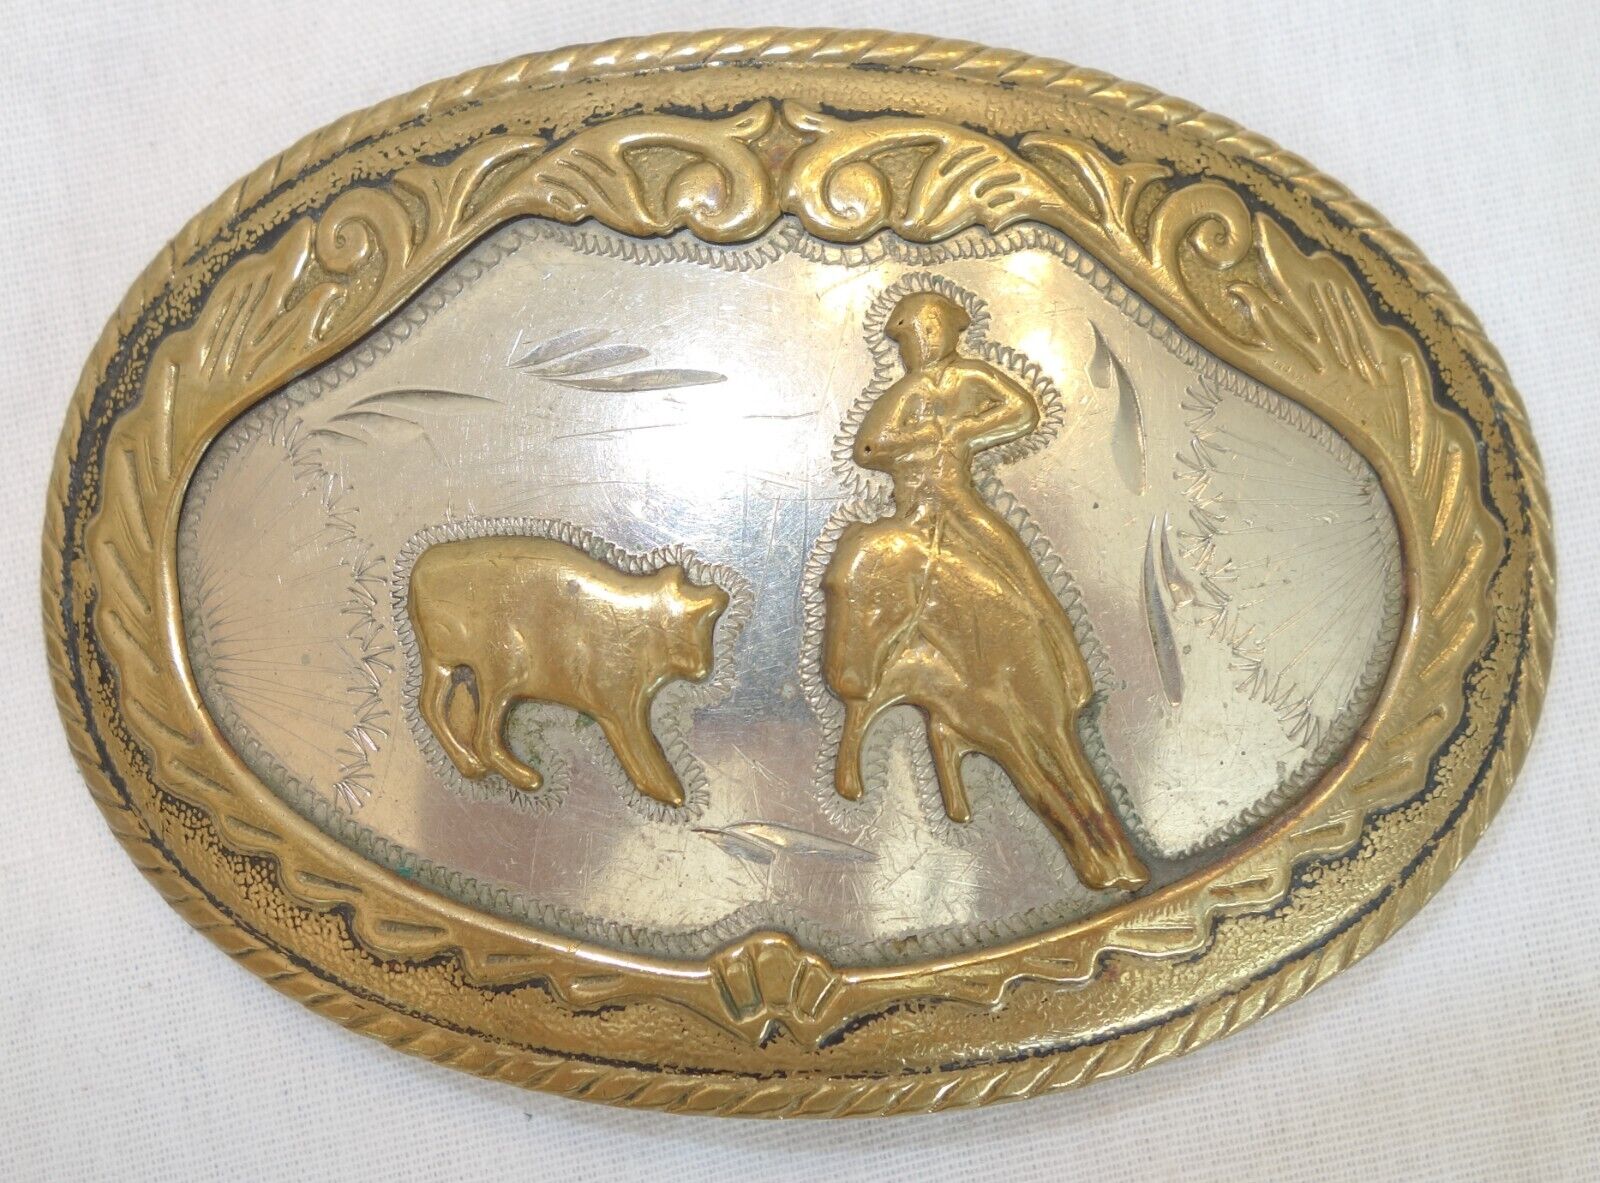 VTG ROCKMOUNT Hand Made Engraved Nickle Silver Cowboy Belt Buckle Rodeo 